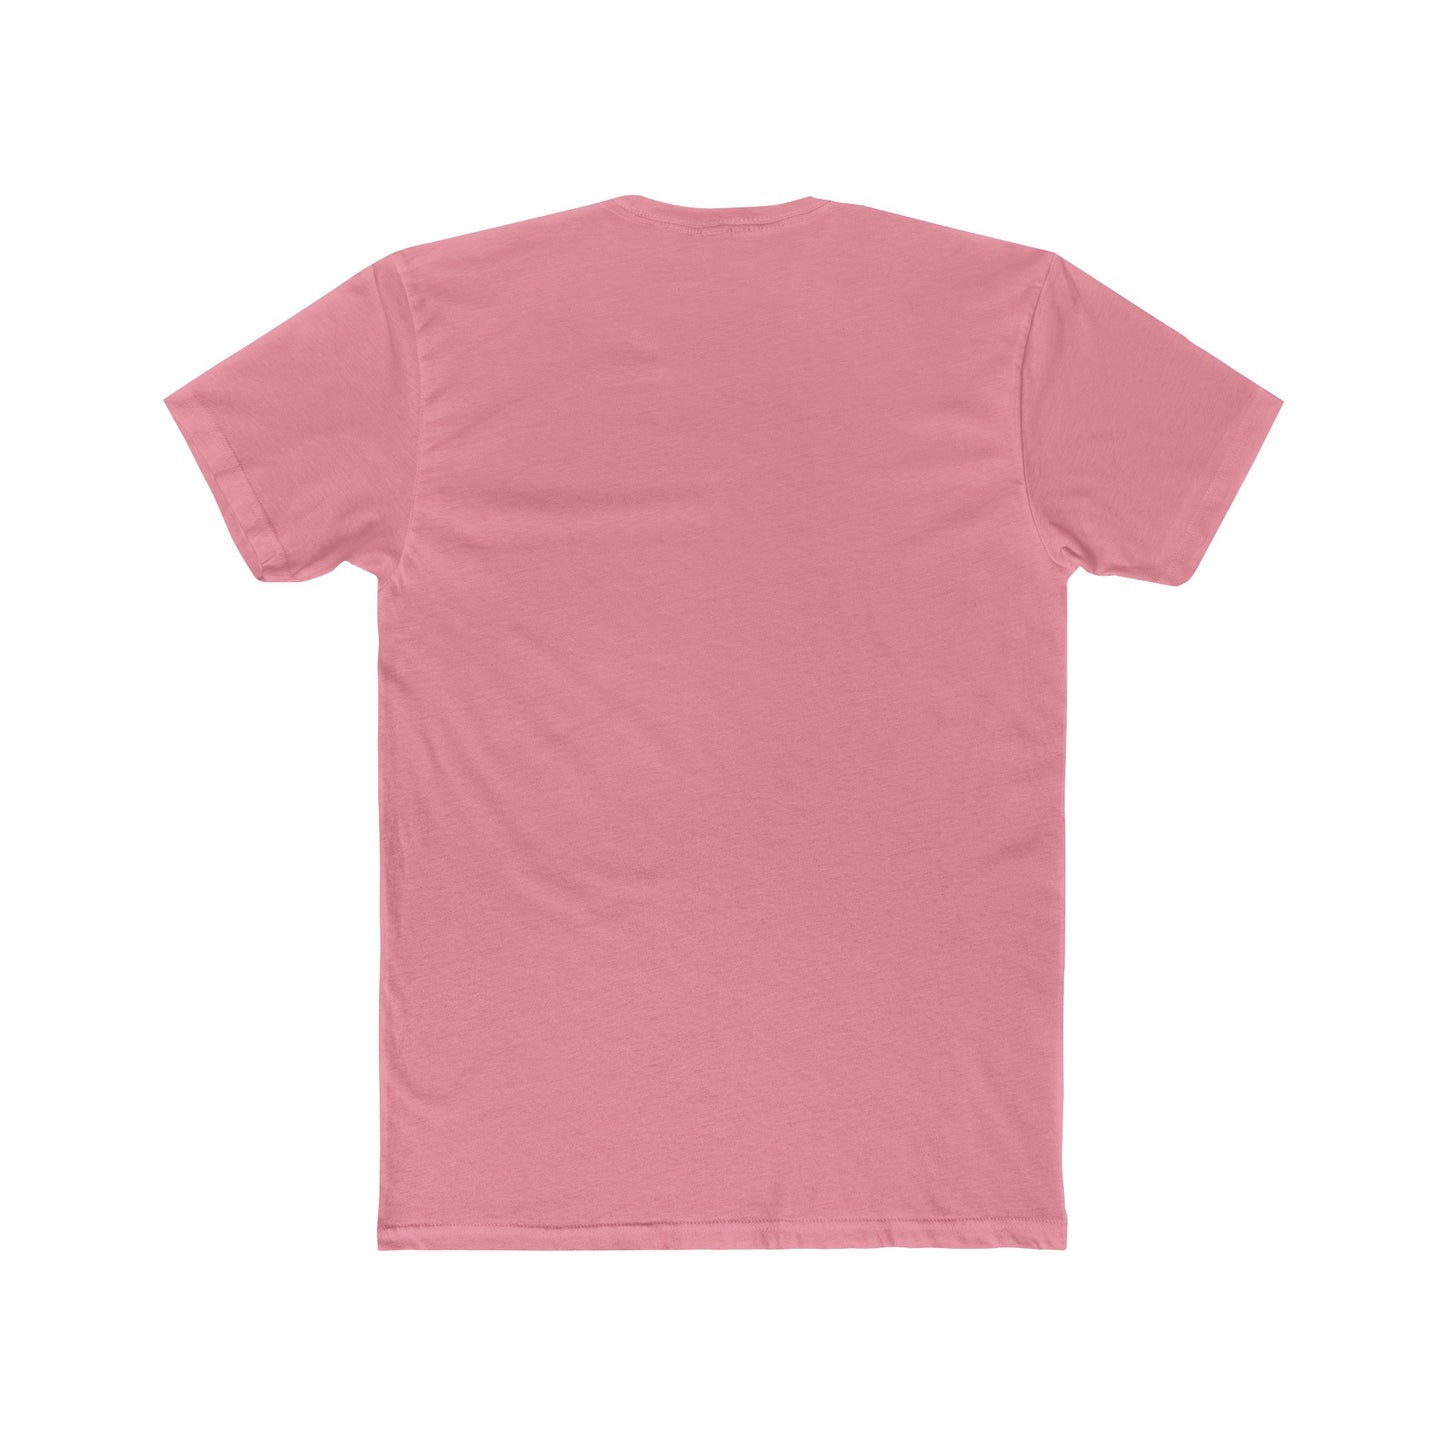 Premium Men's Skyline T-Shirt